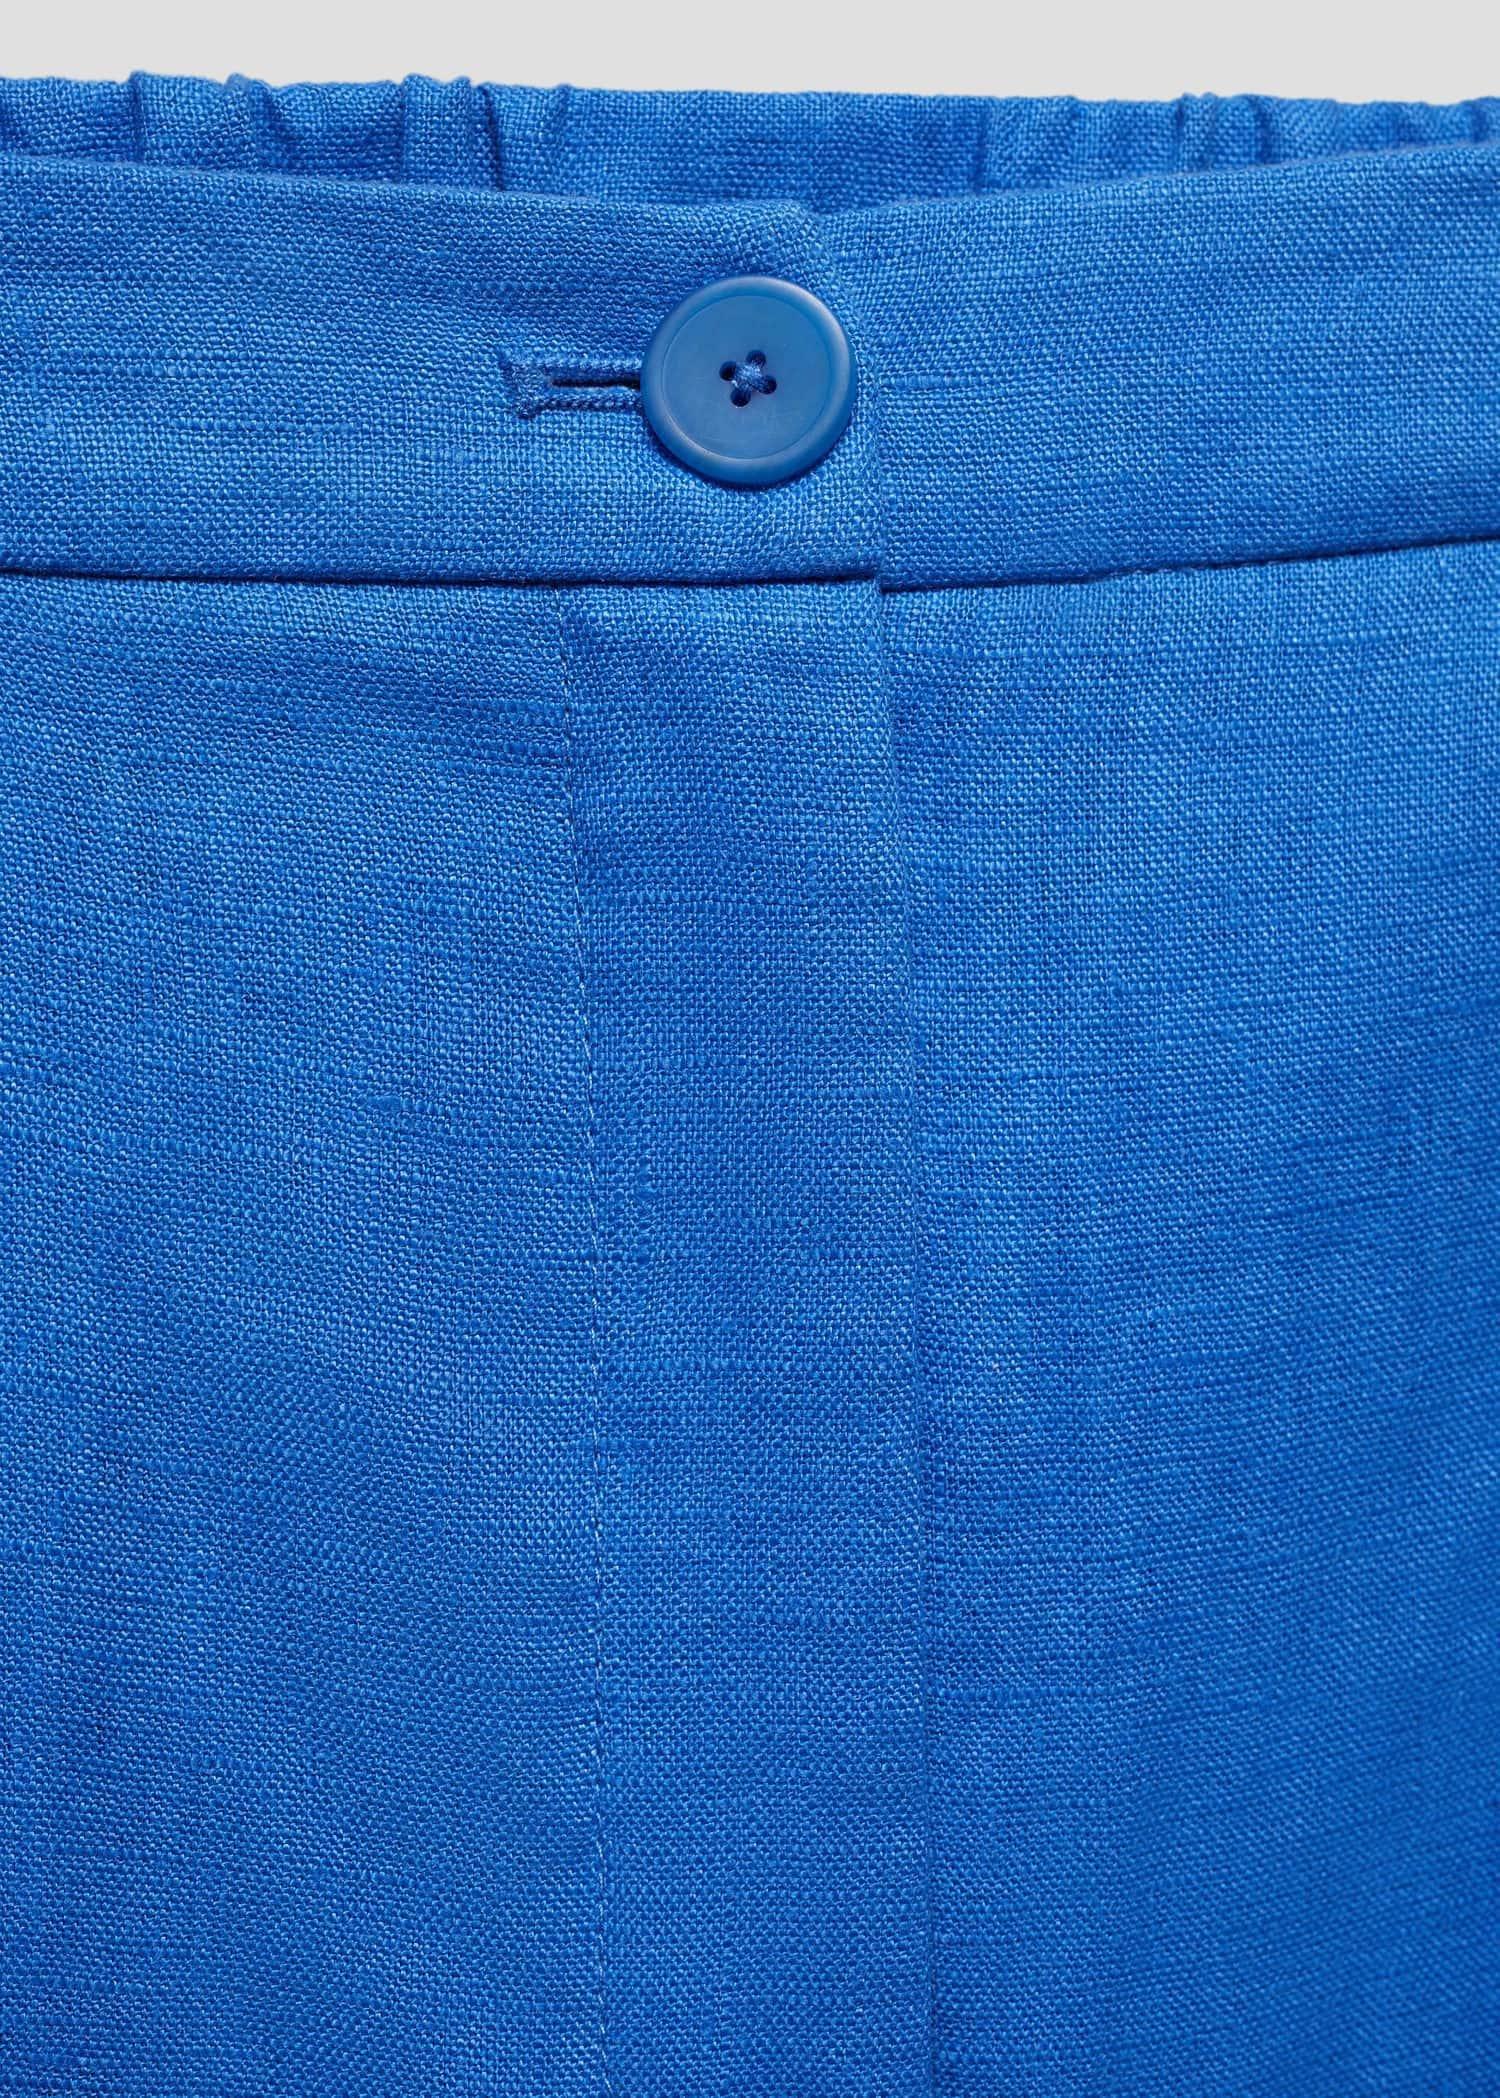 Mango - Blue Linen Straight Trousers